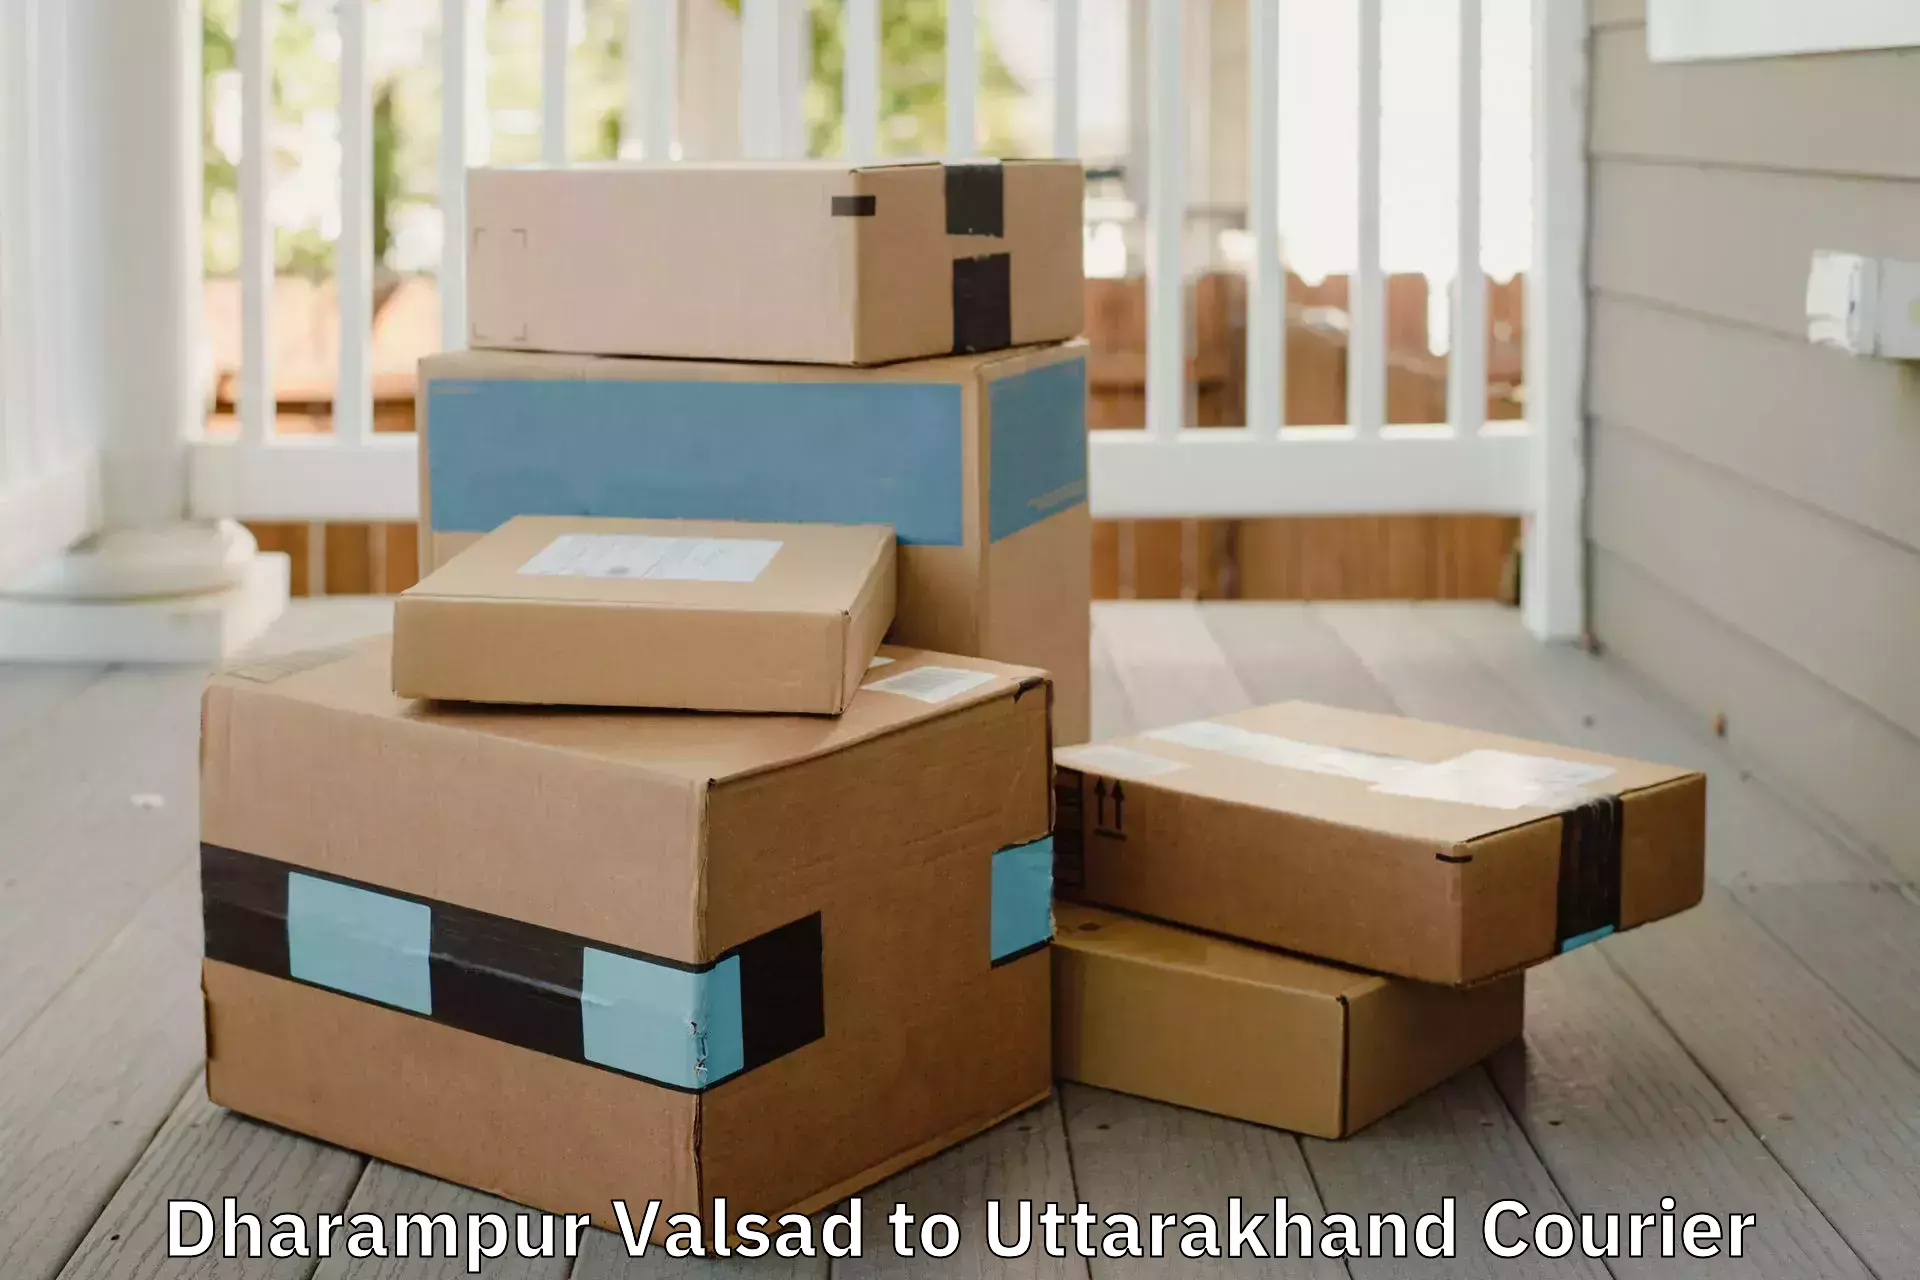 Professional moving company Dharampur Valsad to Srinagar Pauri Garhwal